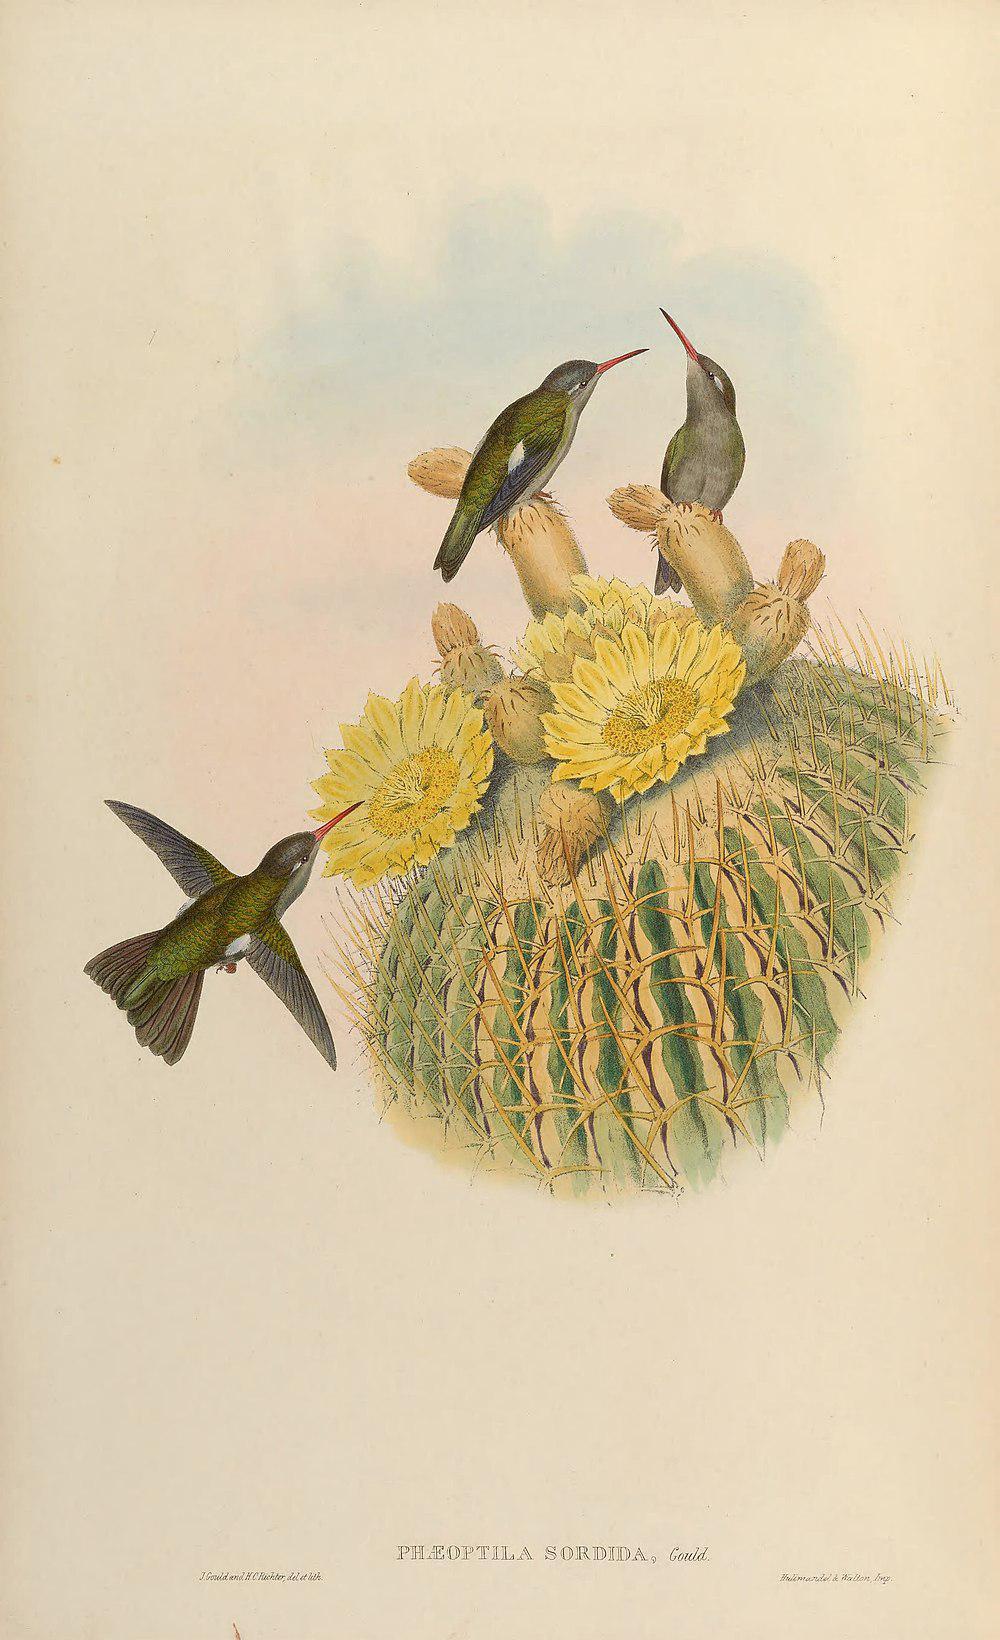 暗阔嘴蜂鸟 / Dusky Hummingbird / Phaeoptila sordida